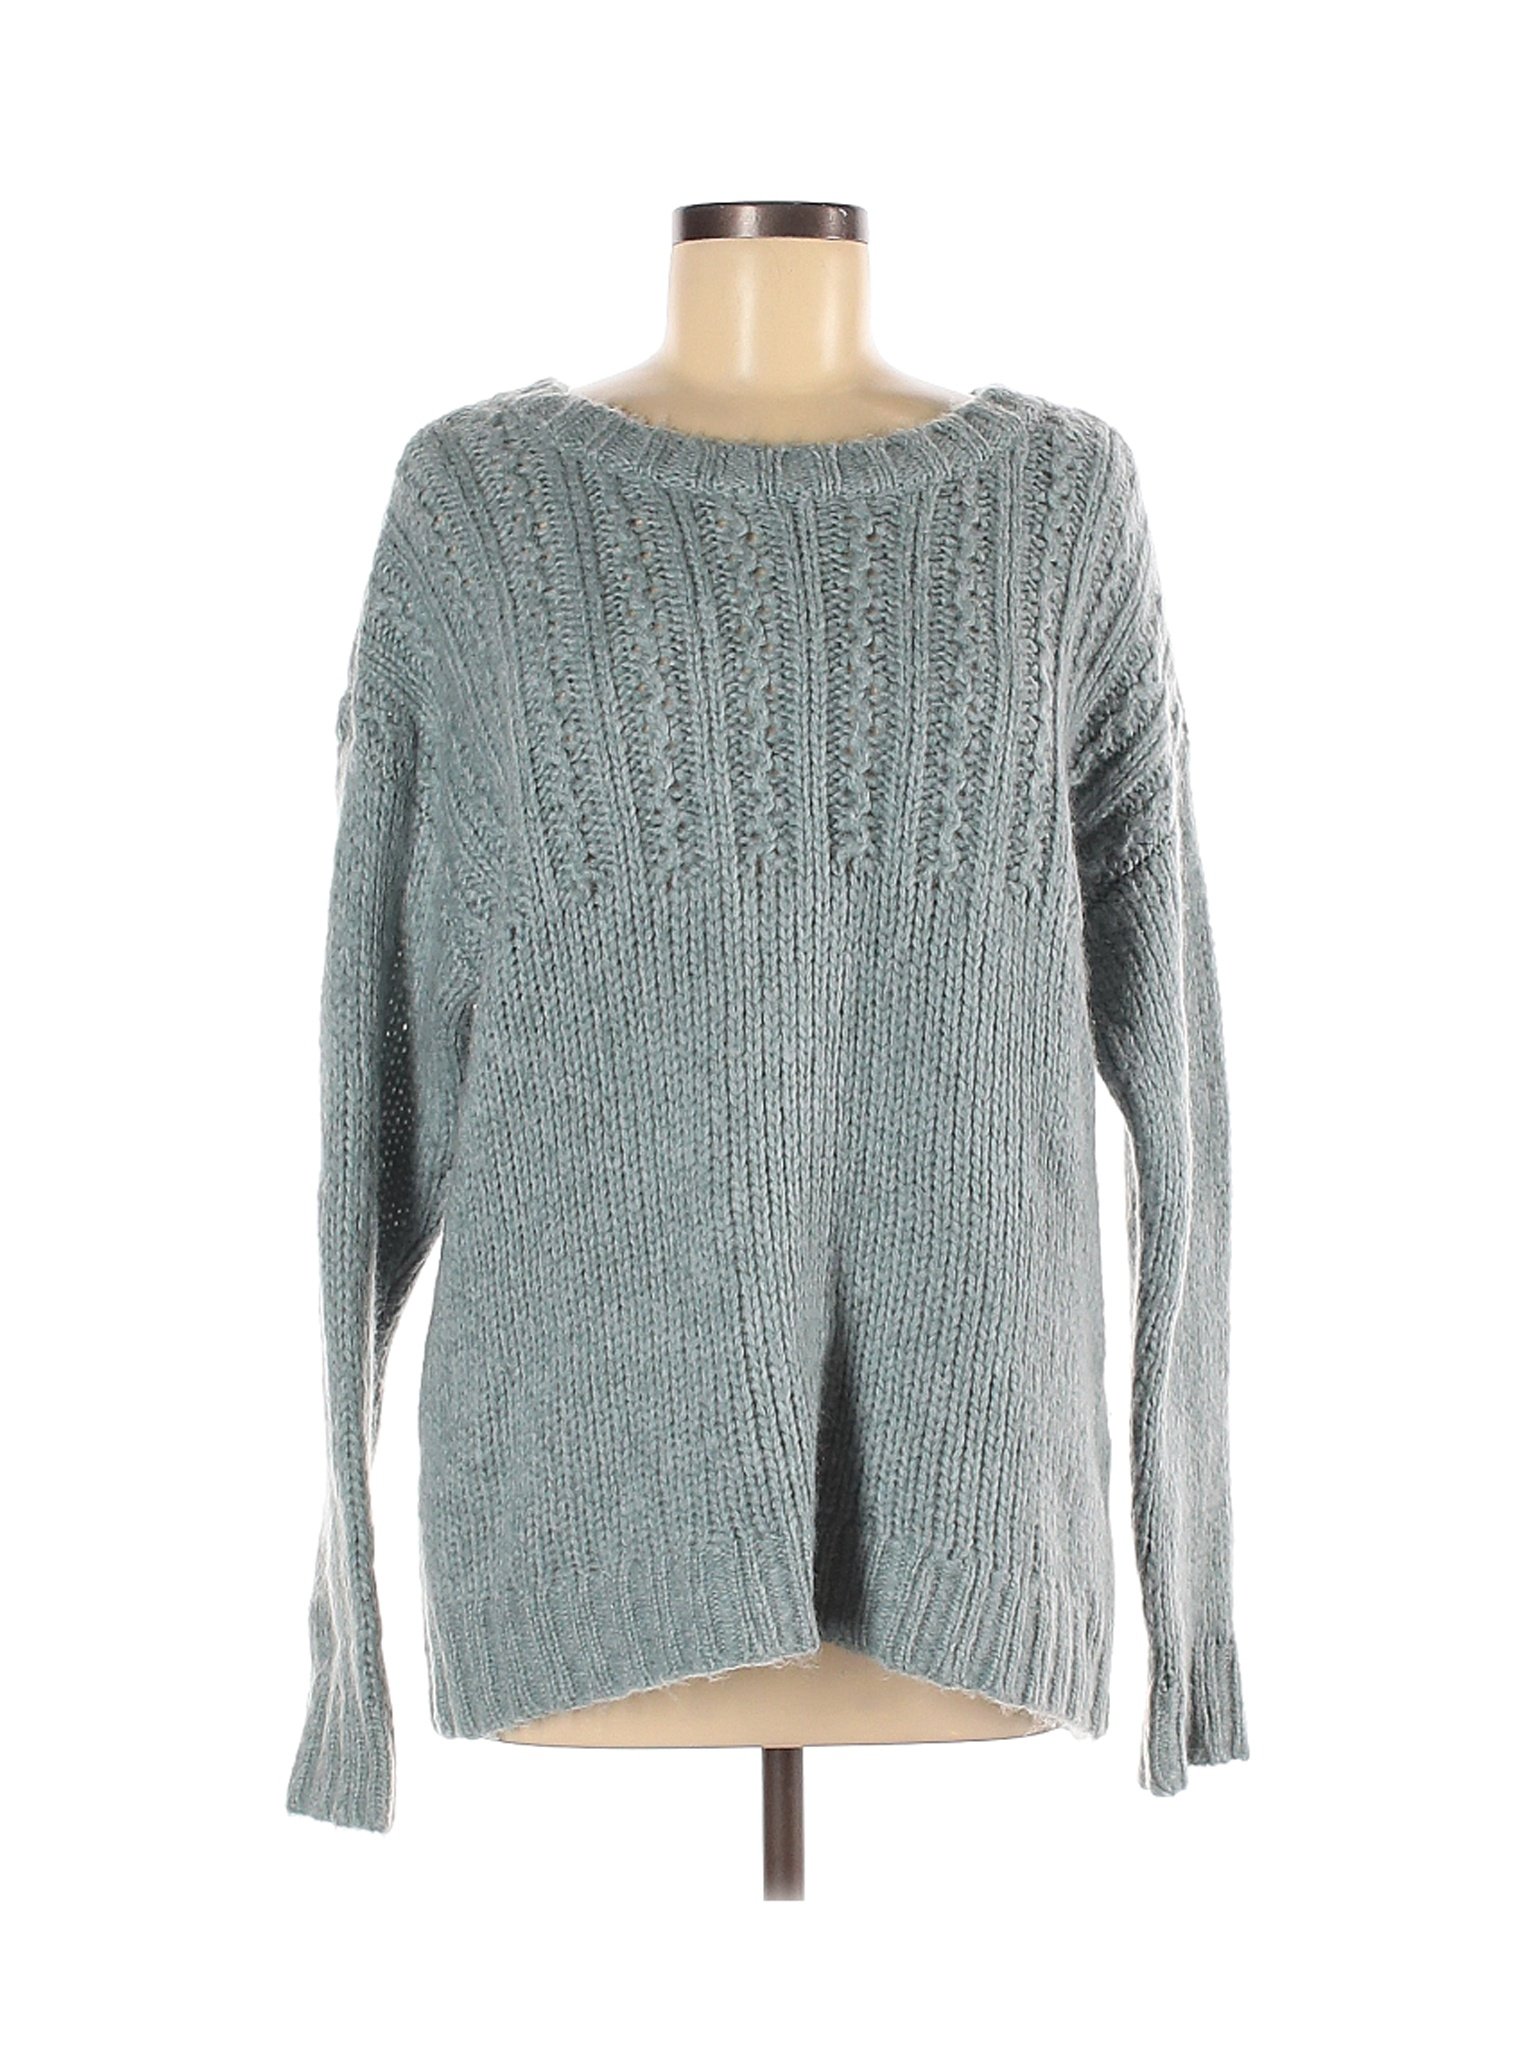 Aerie Women Green Pullover Sweater M | eBay